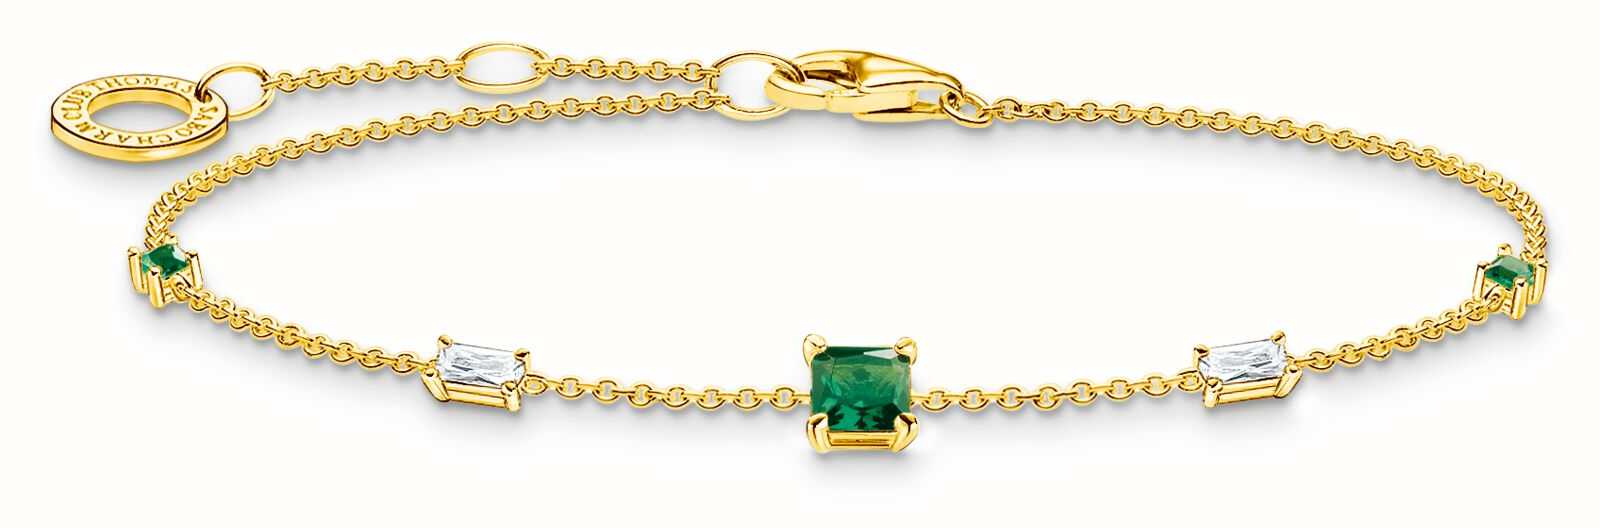 Thomas Sabo Jewellery A2059-971-7-L19V